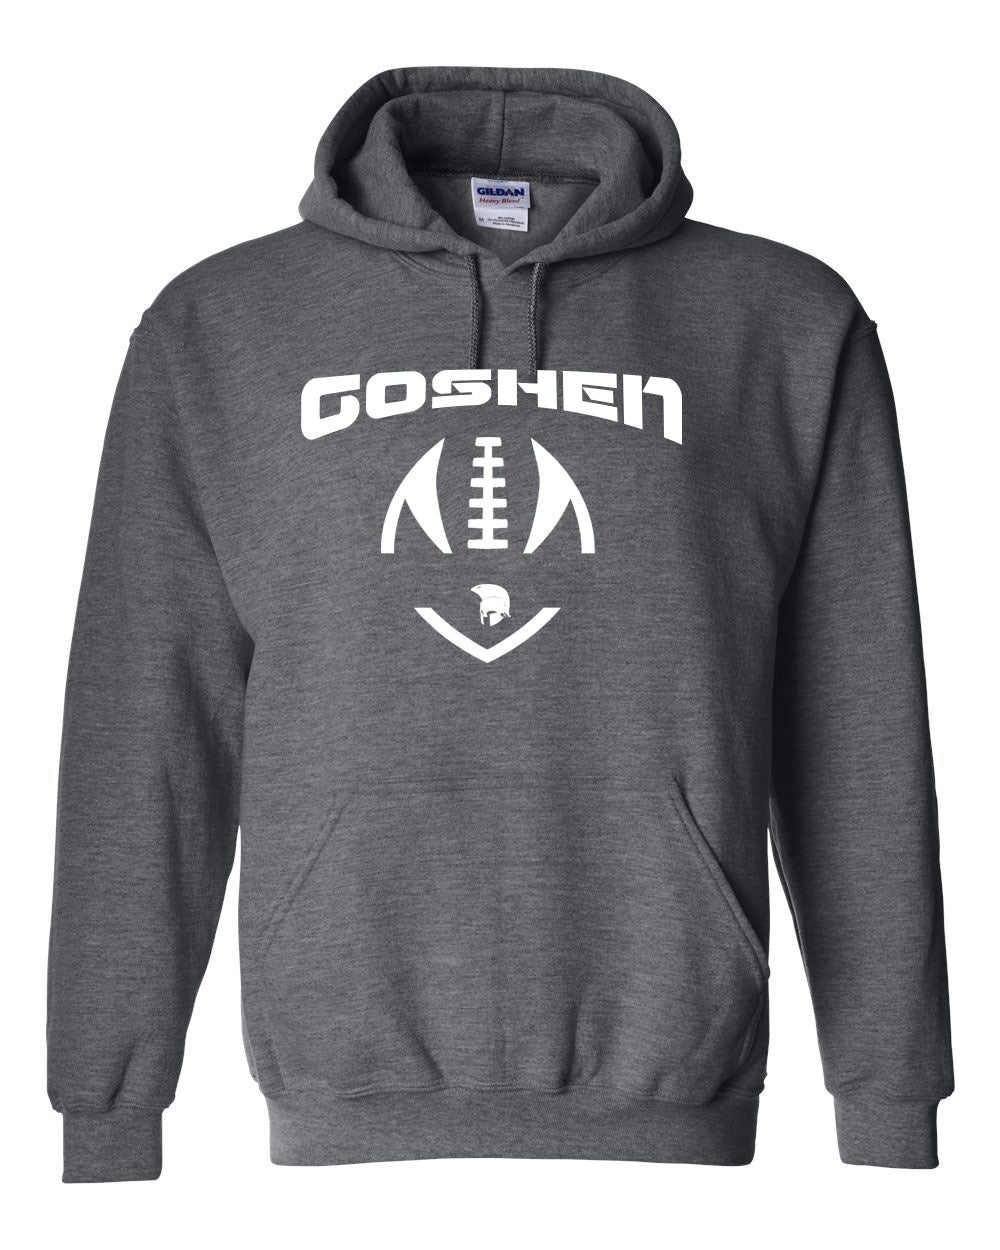 Goshen Football Design 8 Hooded Sweatshirt